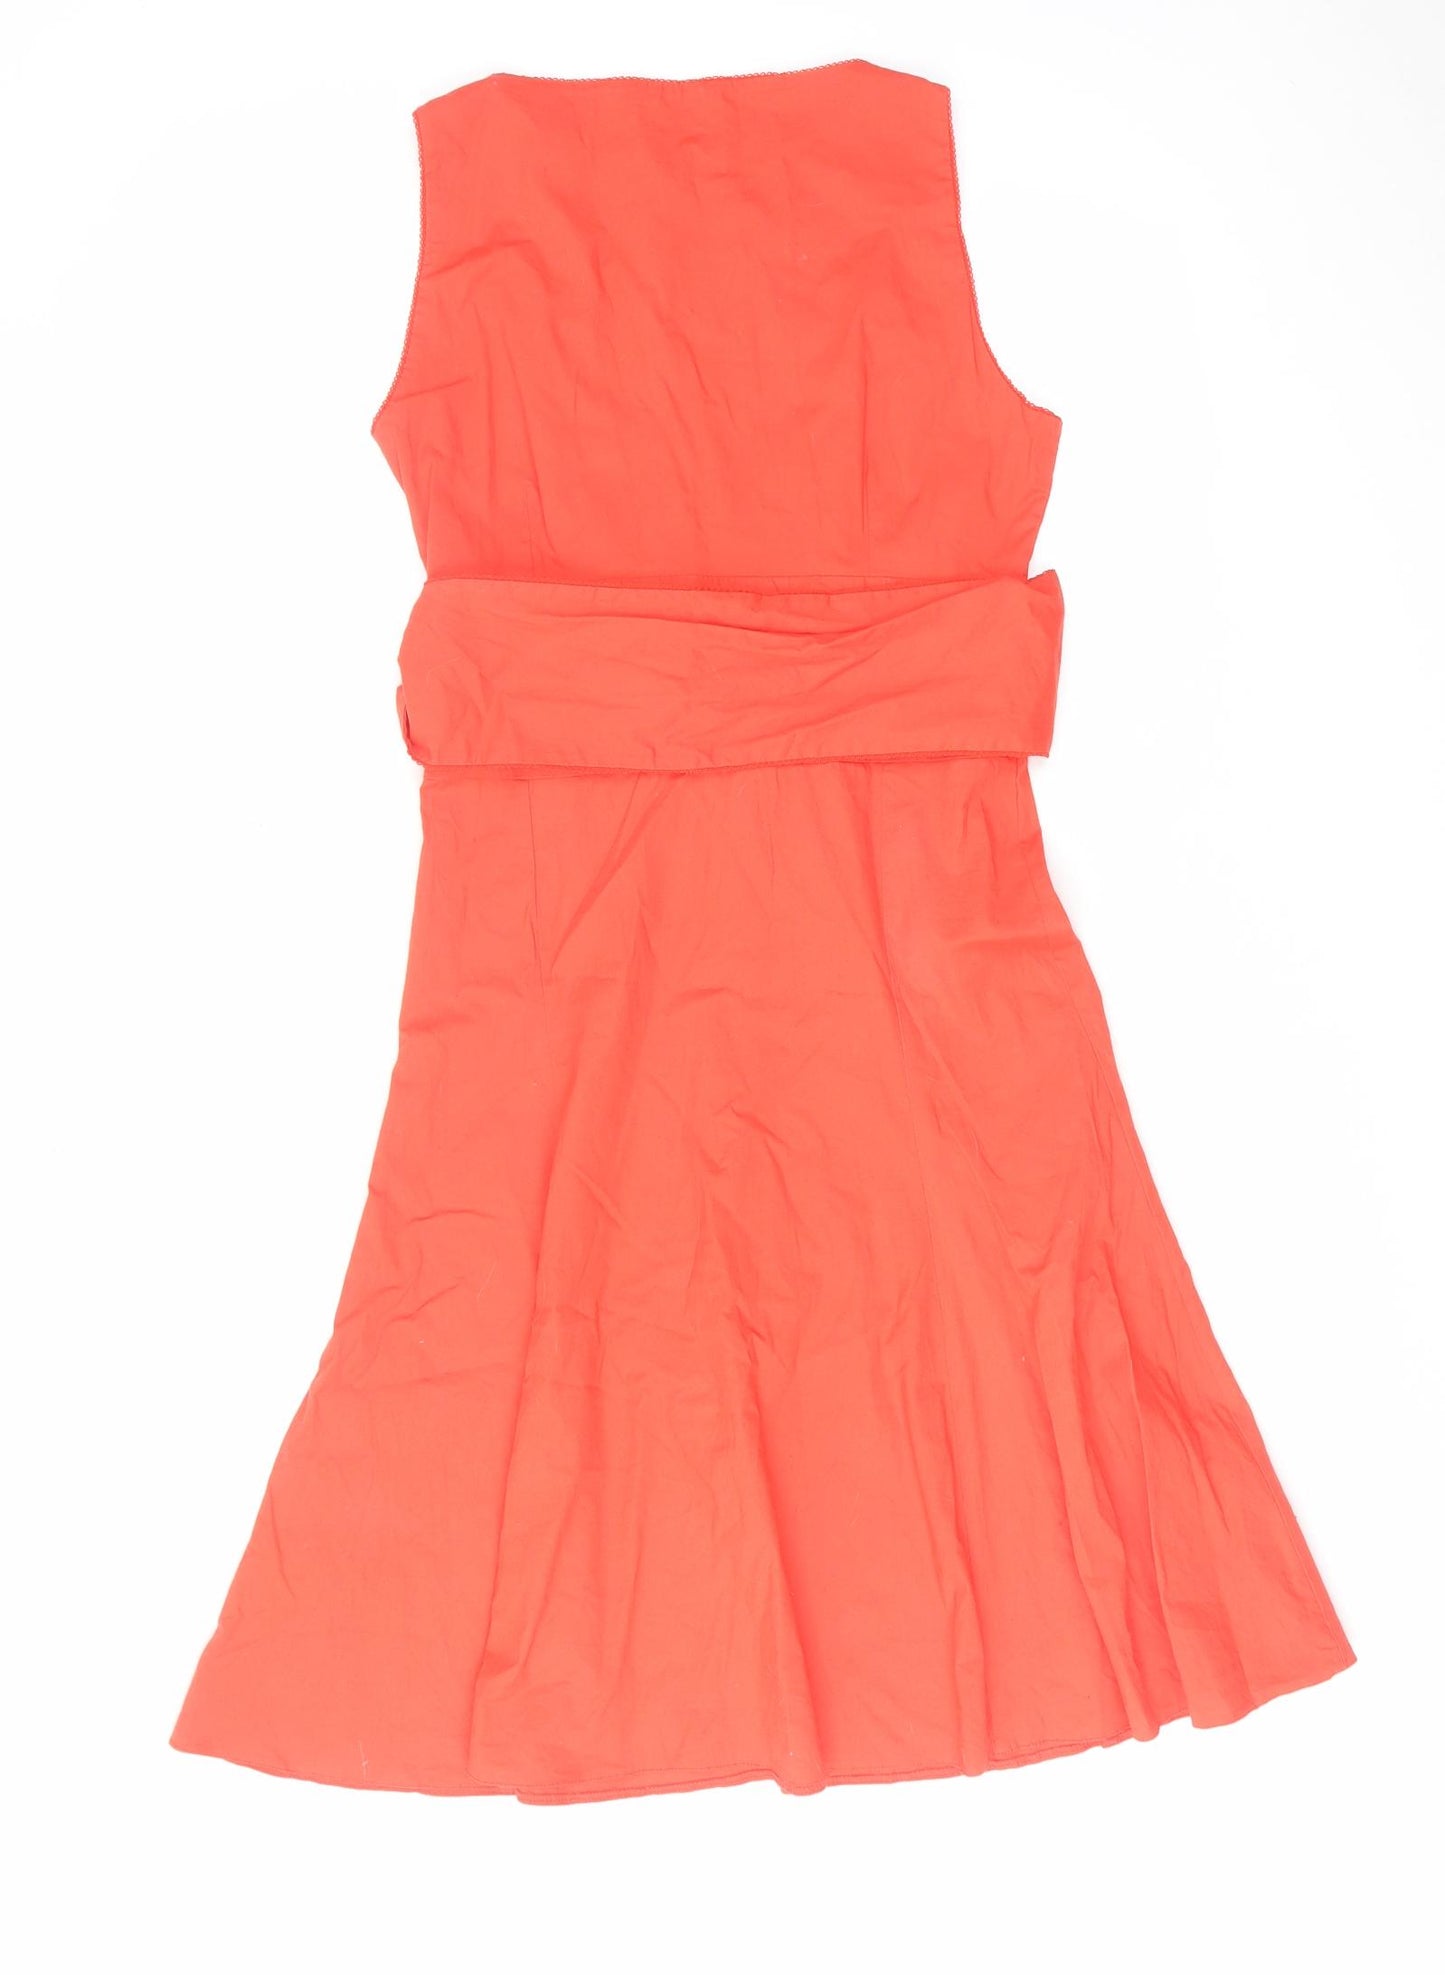 Dorothy Perkins Womens Orange Cotton A-Line Size 10 Round Neck Zip